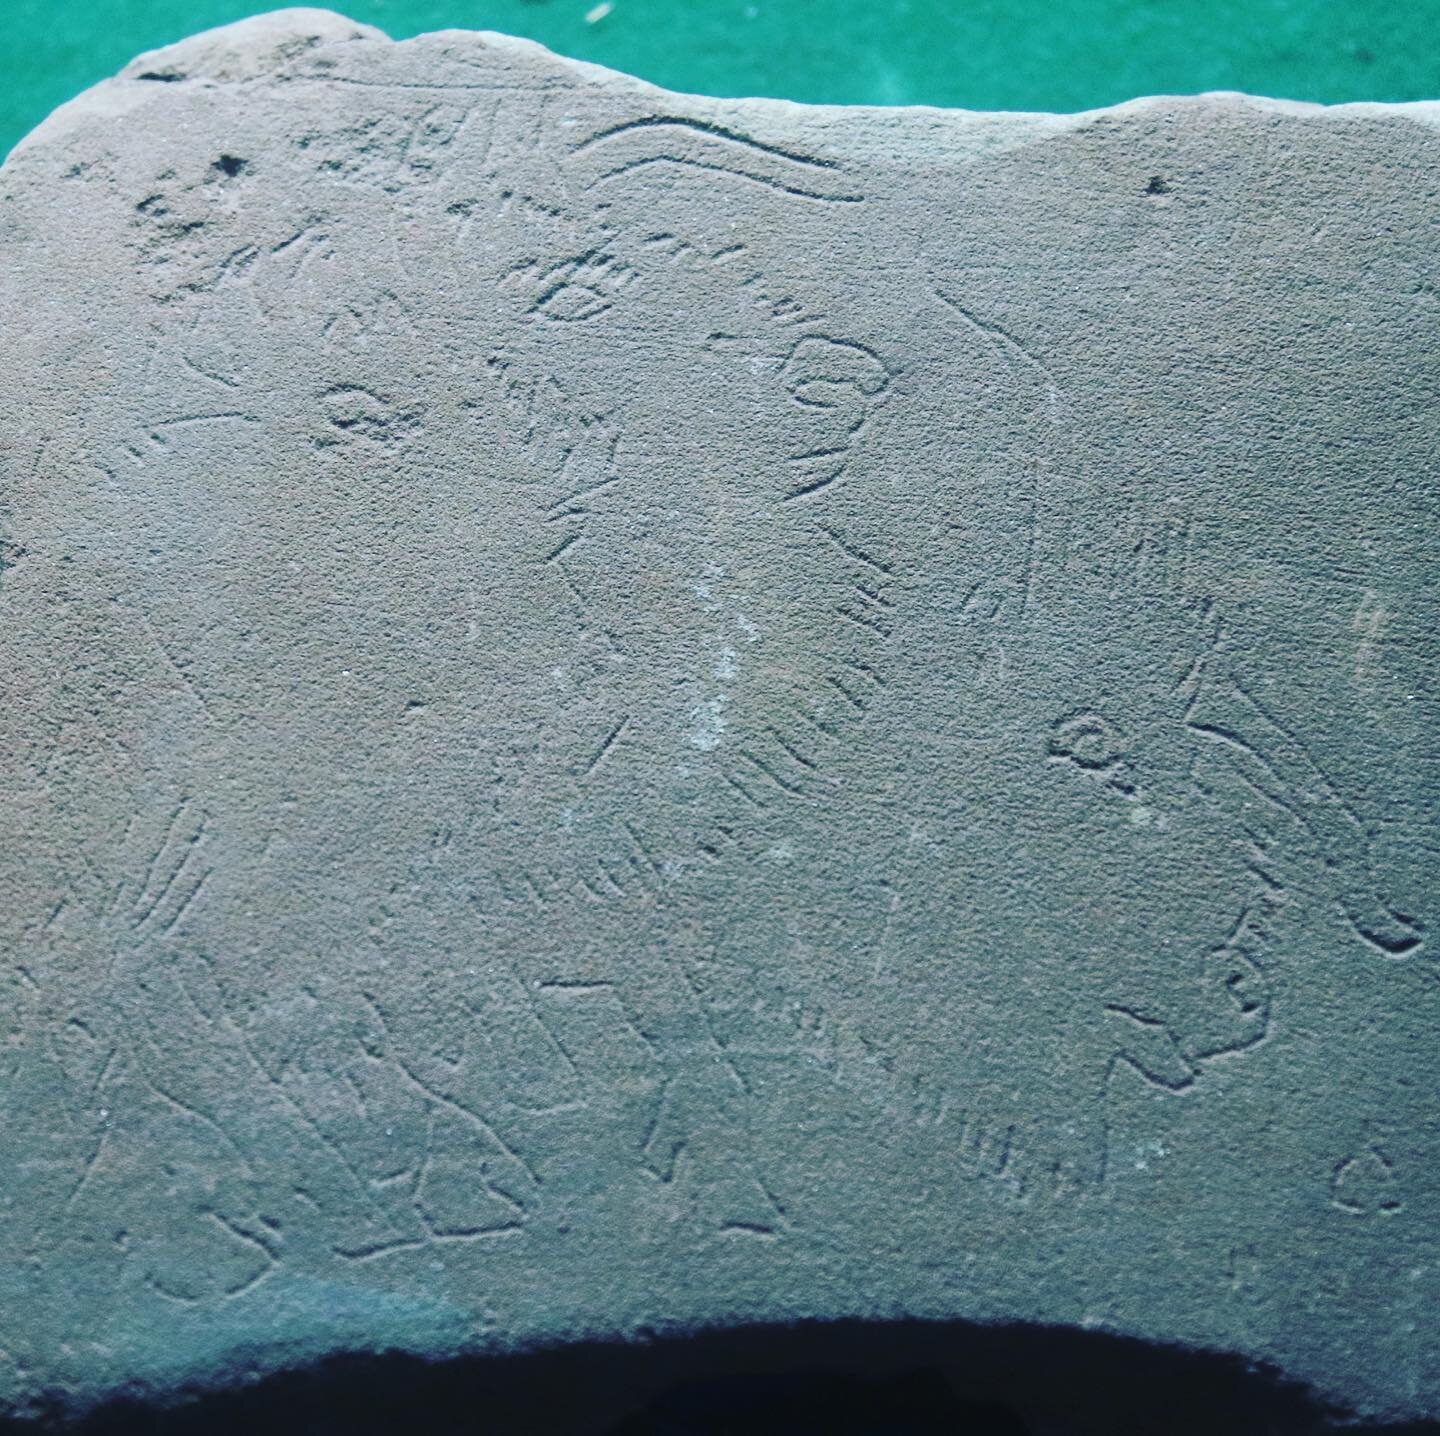 A wonderful engraving of 3 bison on a stone slab. At Chateau de Sauveboeuf, Aubas, Dordogne. --------------------------------------#paleolithic #prehistoric #prehistoire #paleo #perigord #dordogne #engraving #france #art #archaeology #stoneart #stone